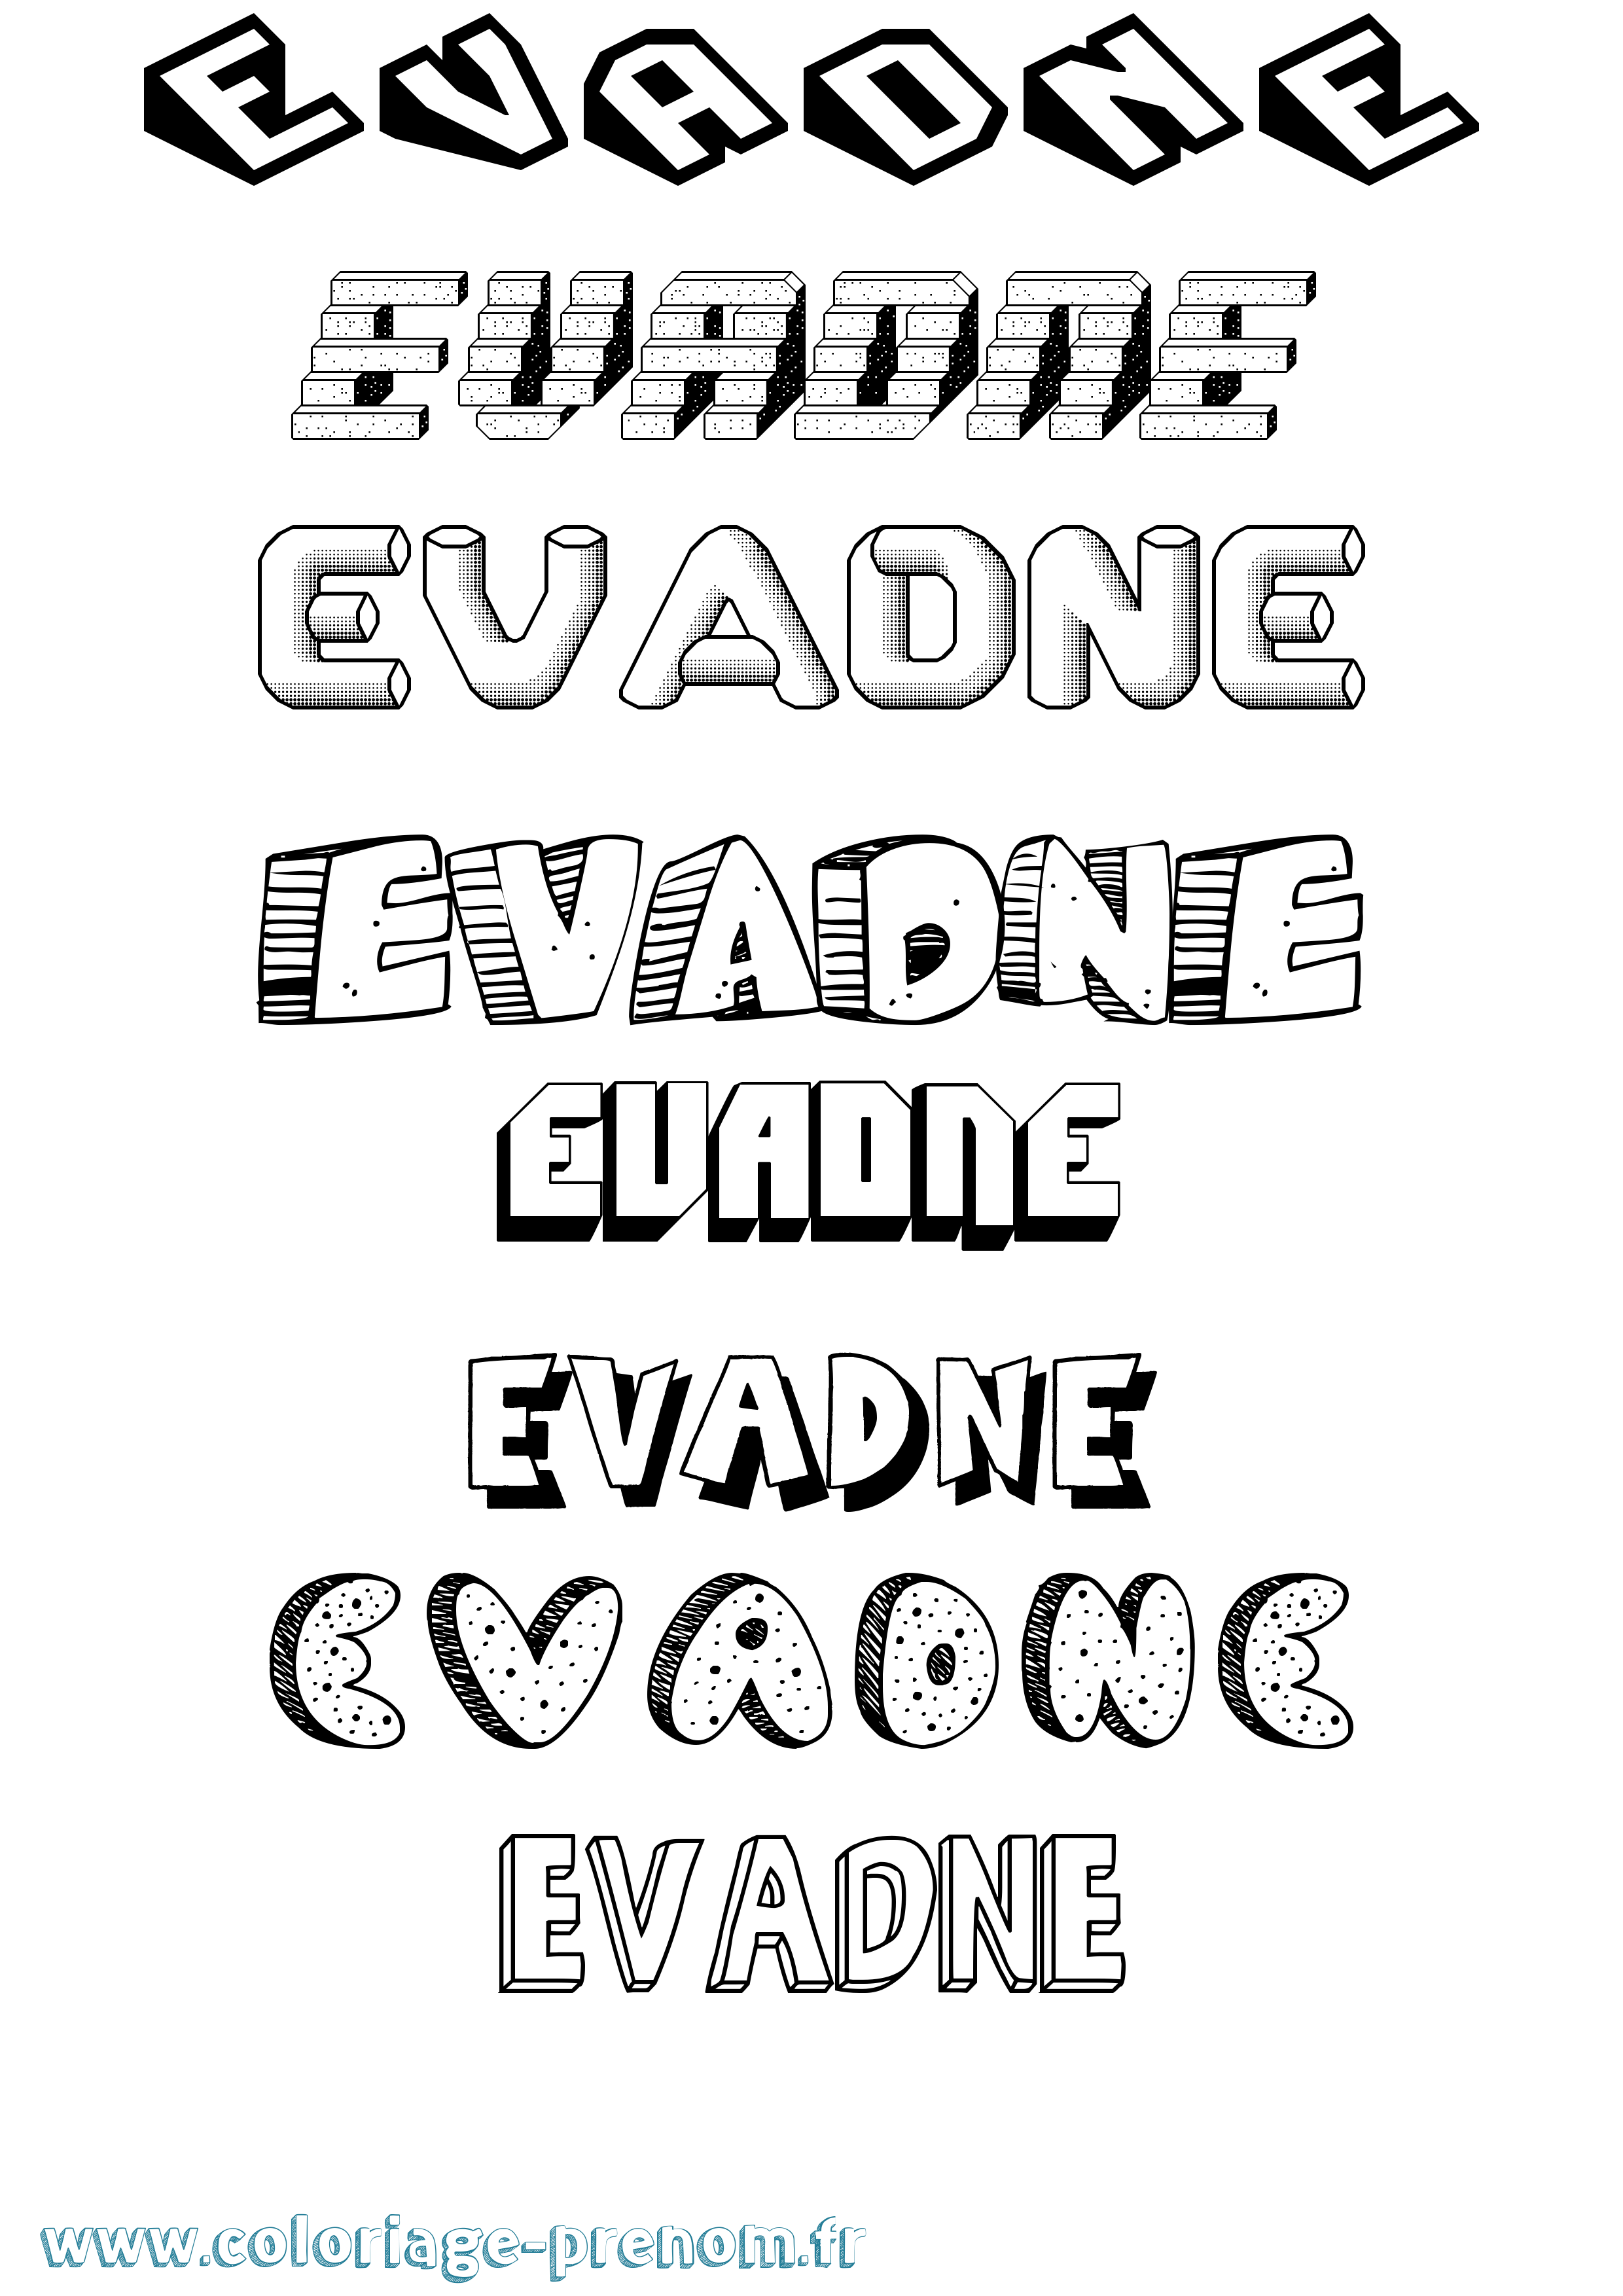 Coloriage prénom Evadne Effet 3D